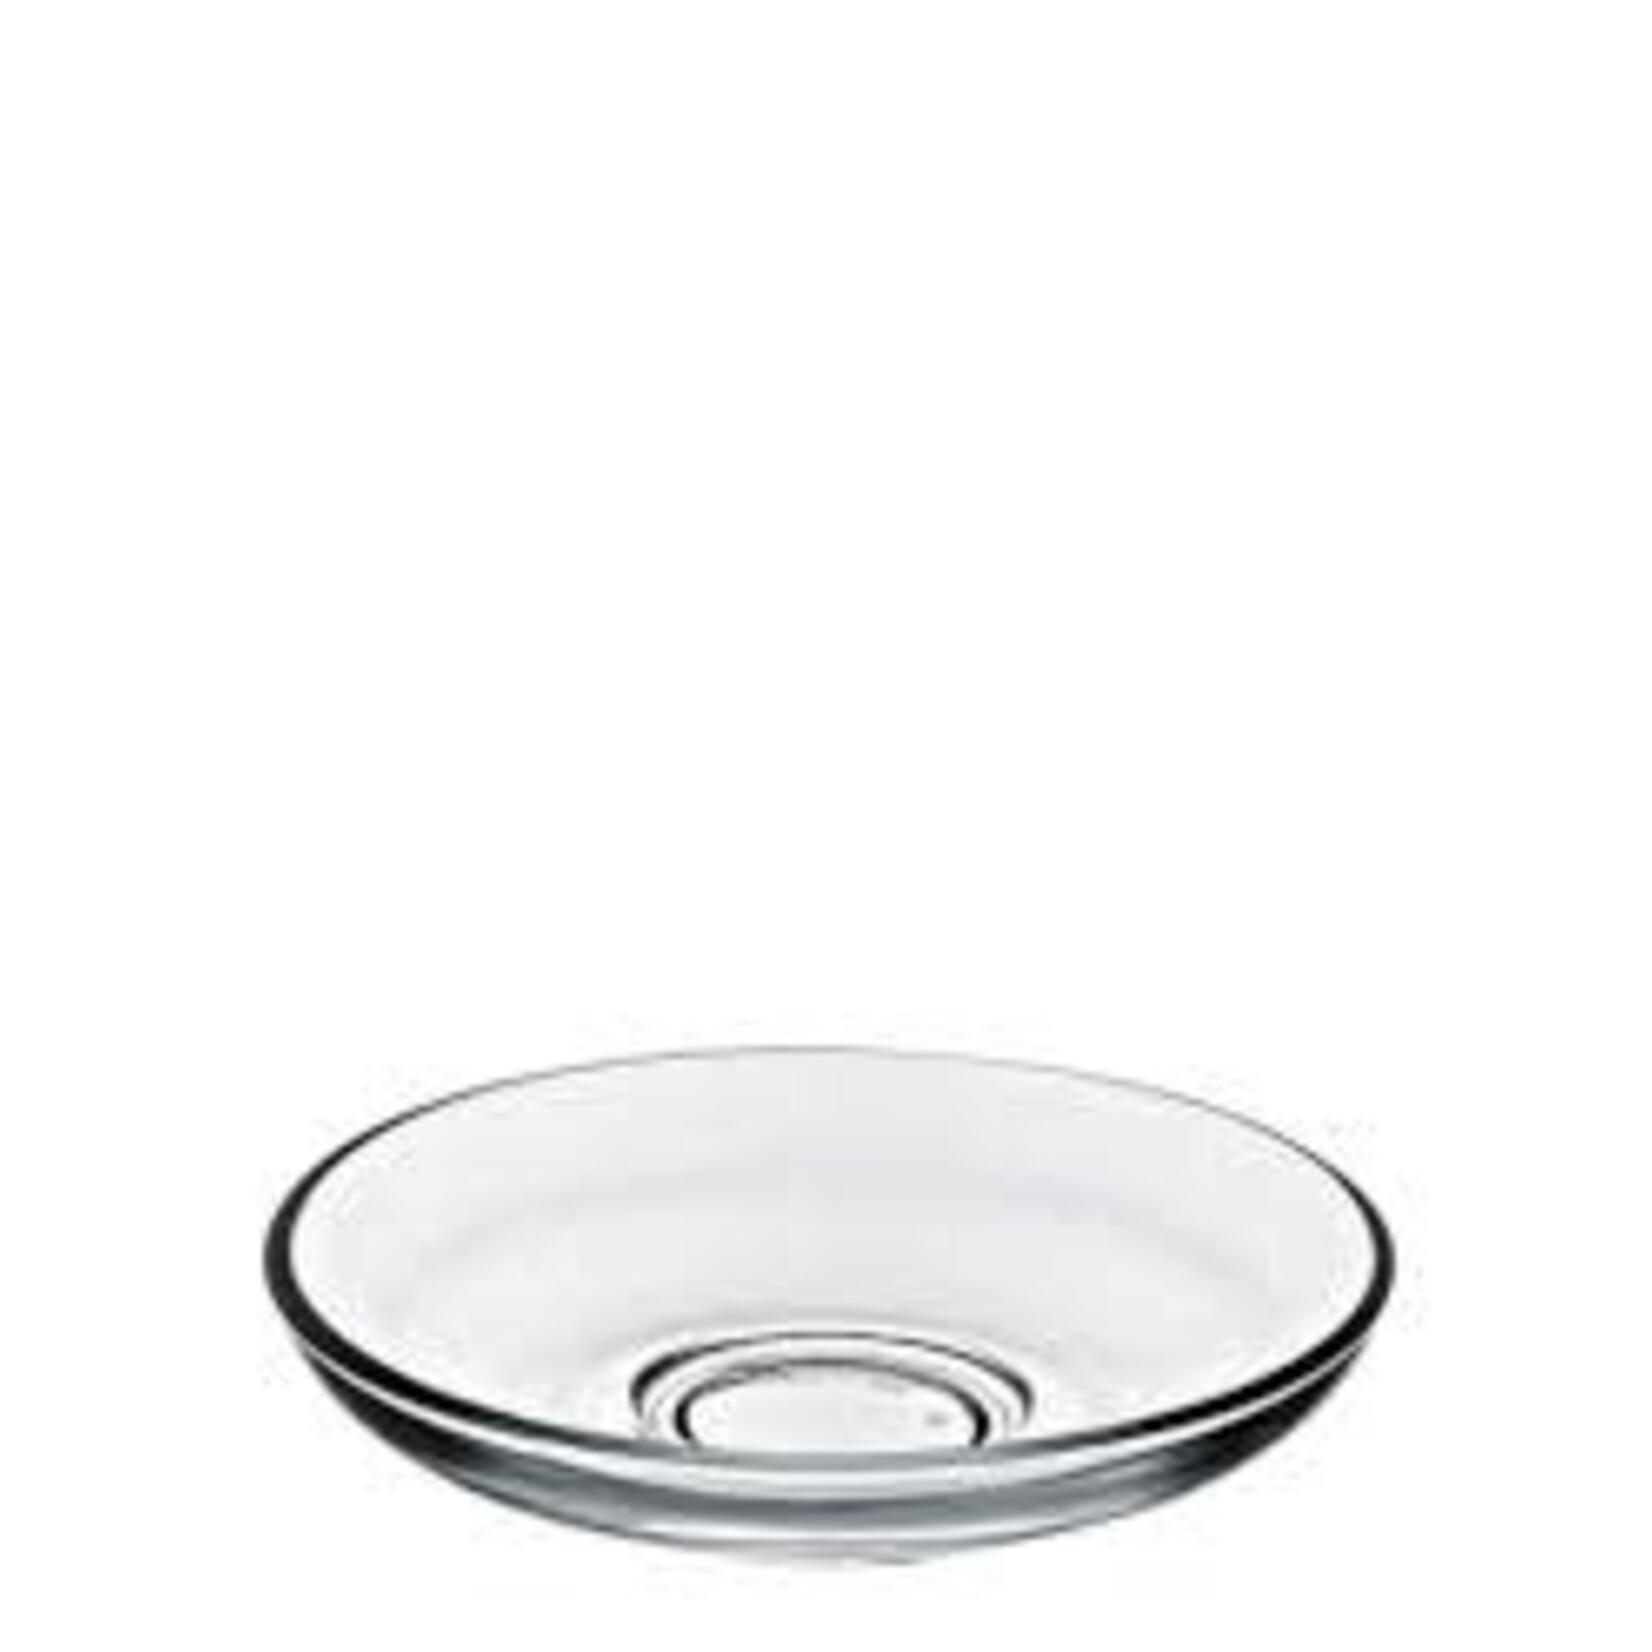 Pasabache - Turkey 1021668/54251 Home 4.25" Saucer glass for tea cup 24/case